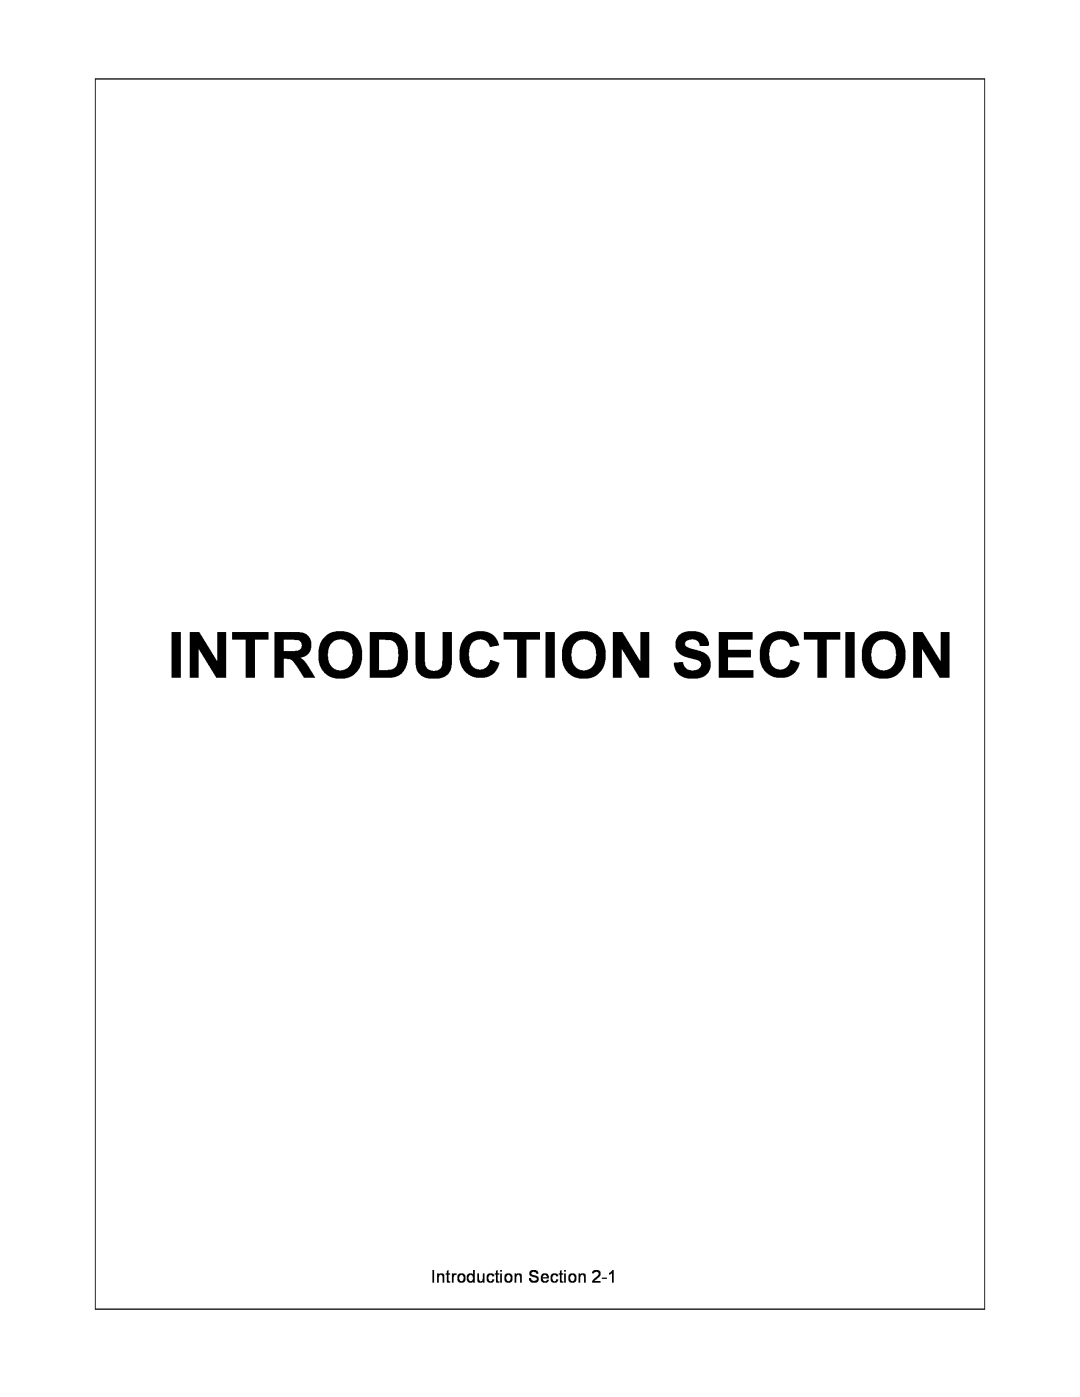 Alamo 800 manual Introduction Section 